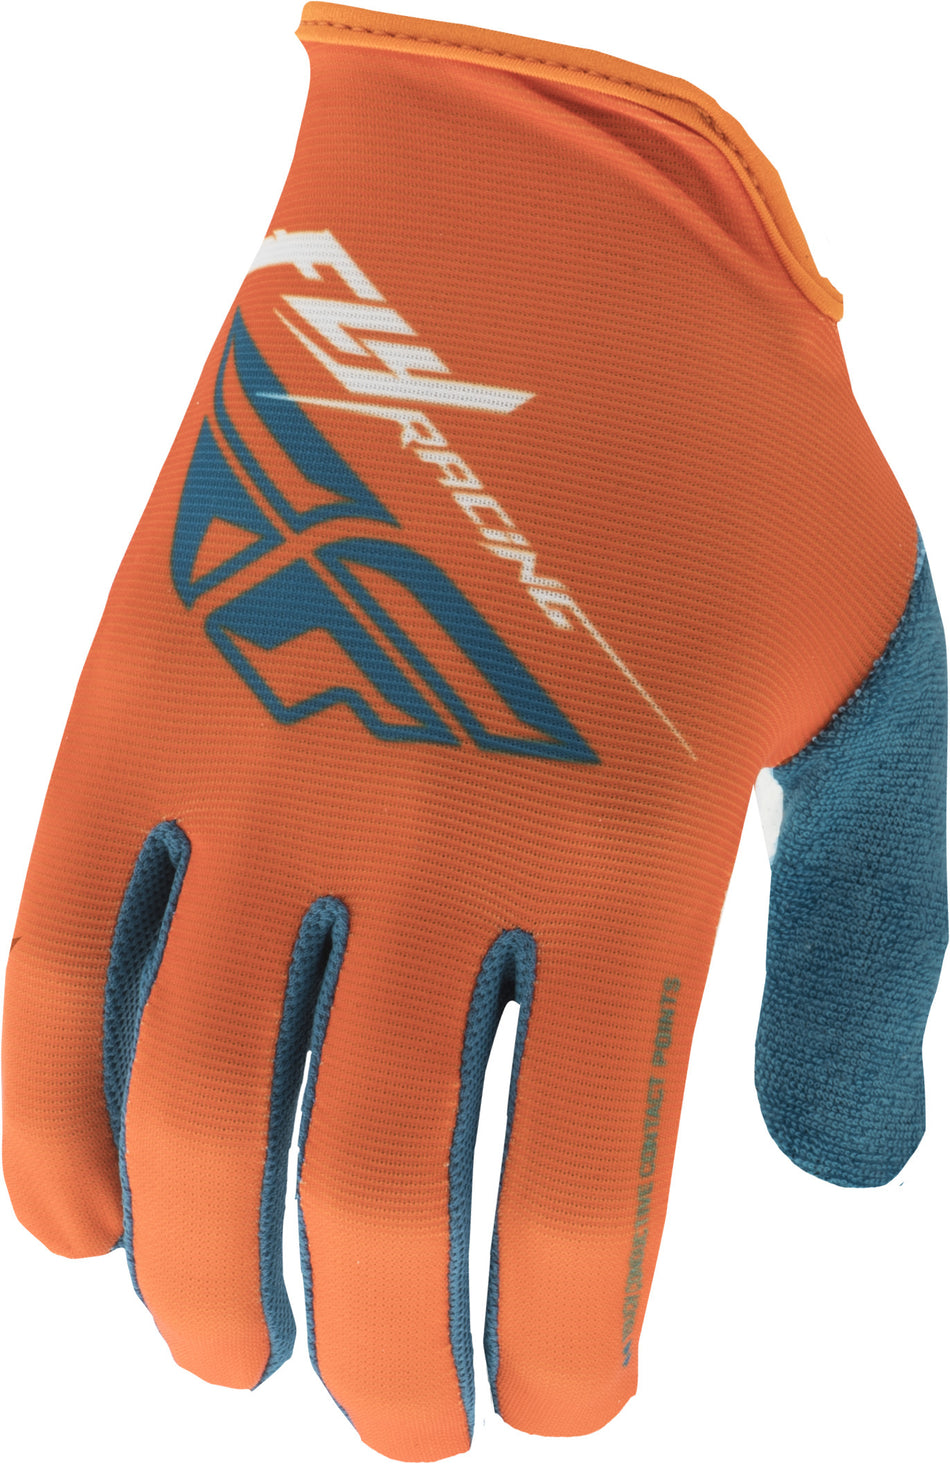 FLY RACING Media Gloves Orange/Teal/White Sz 13 350-09813